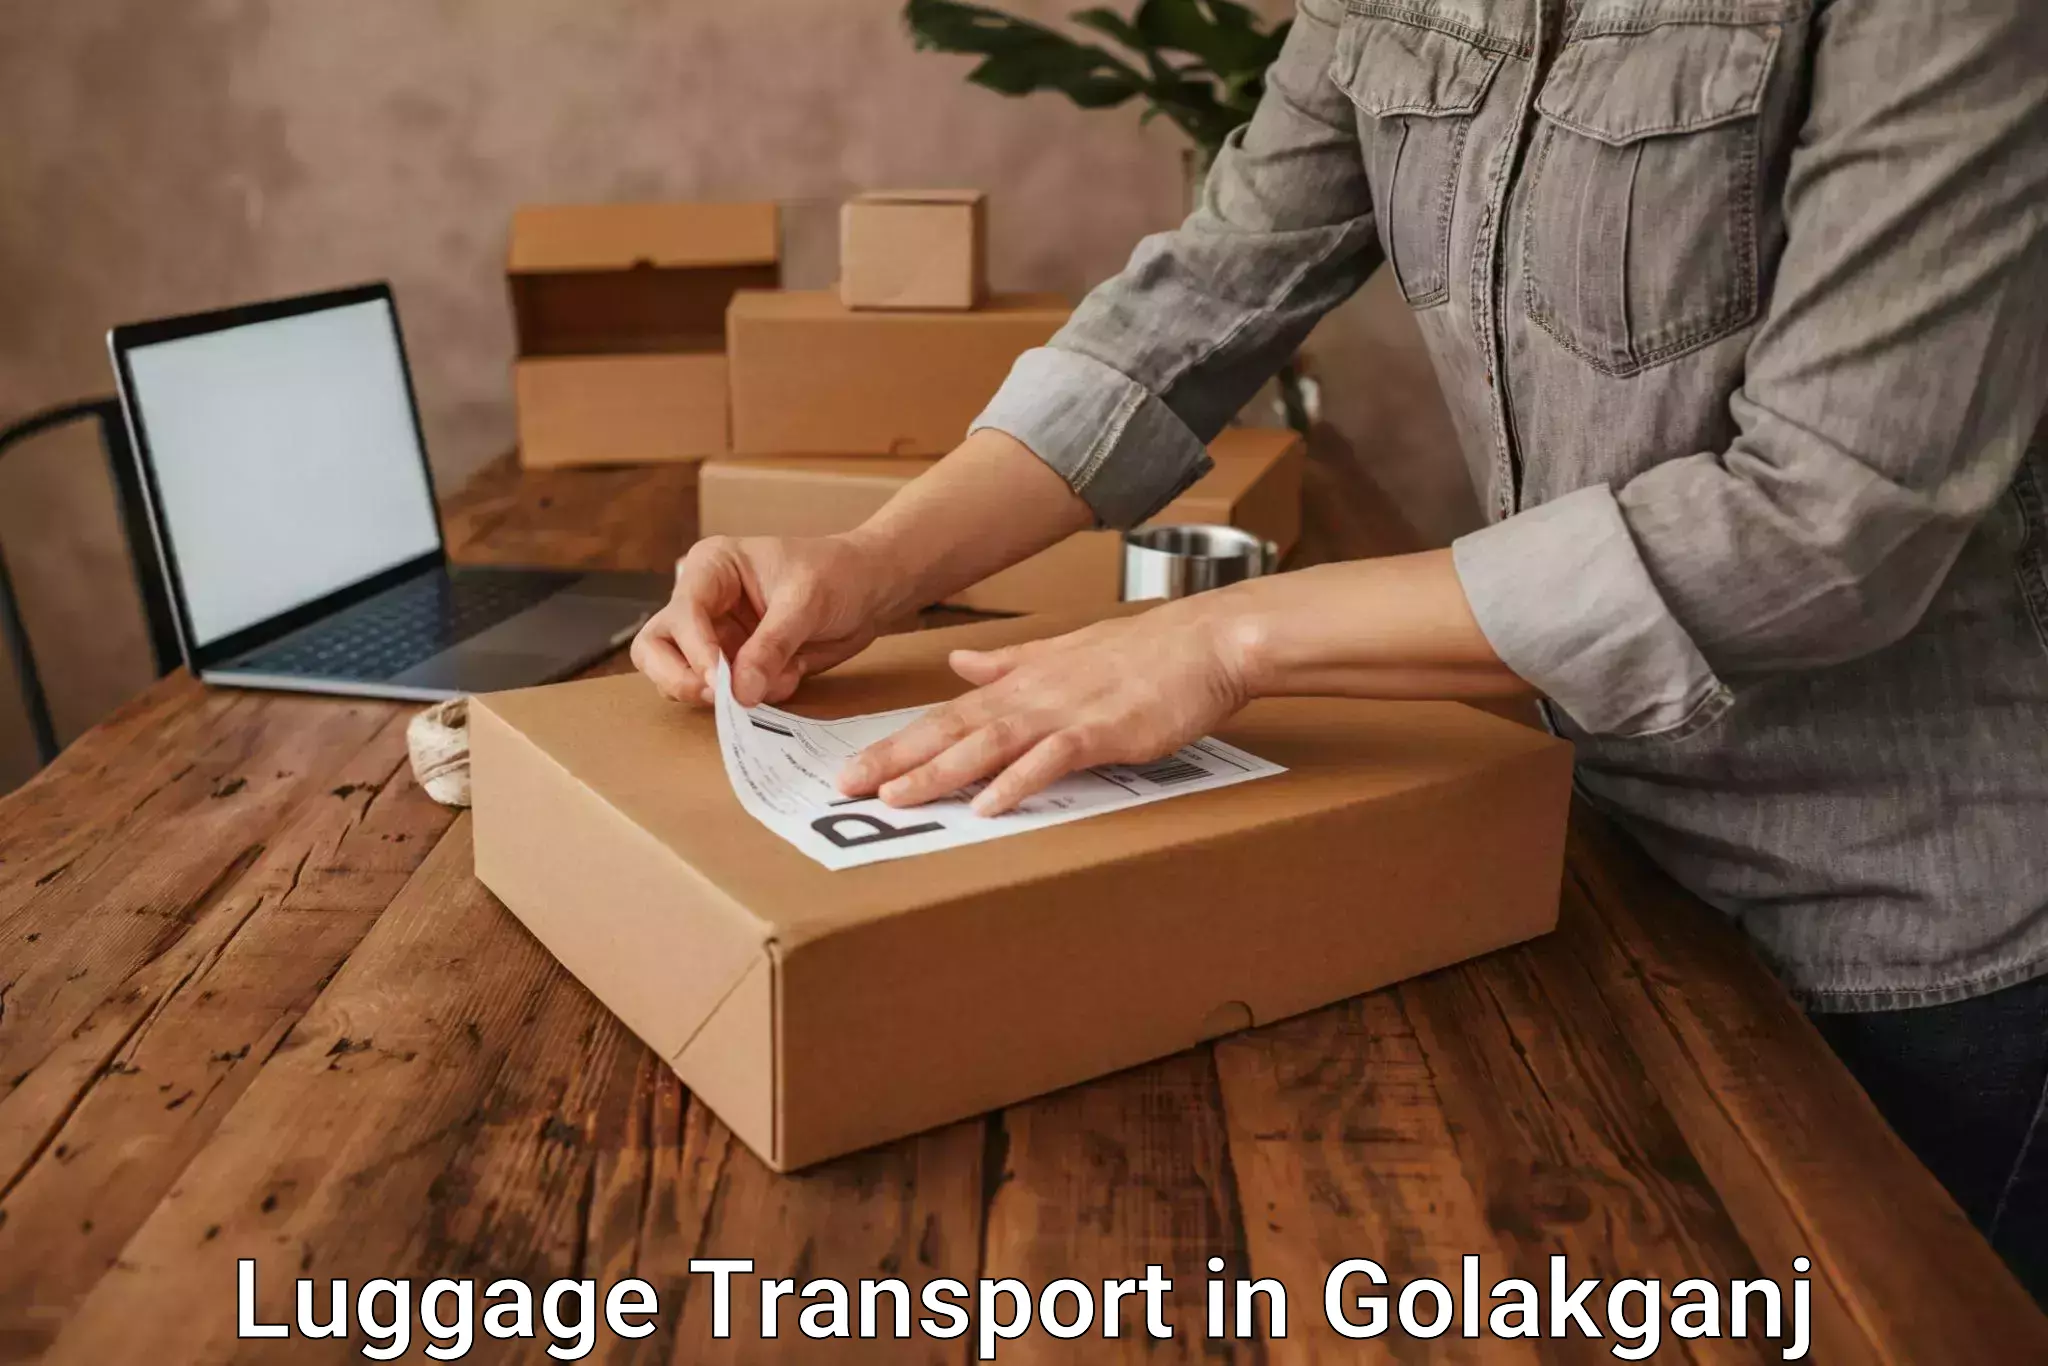 Automated luggage transport in Golakganj